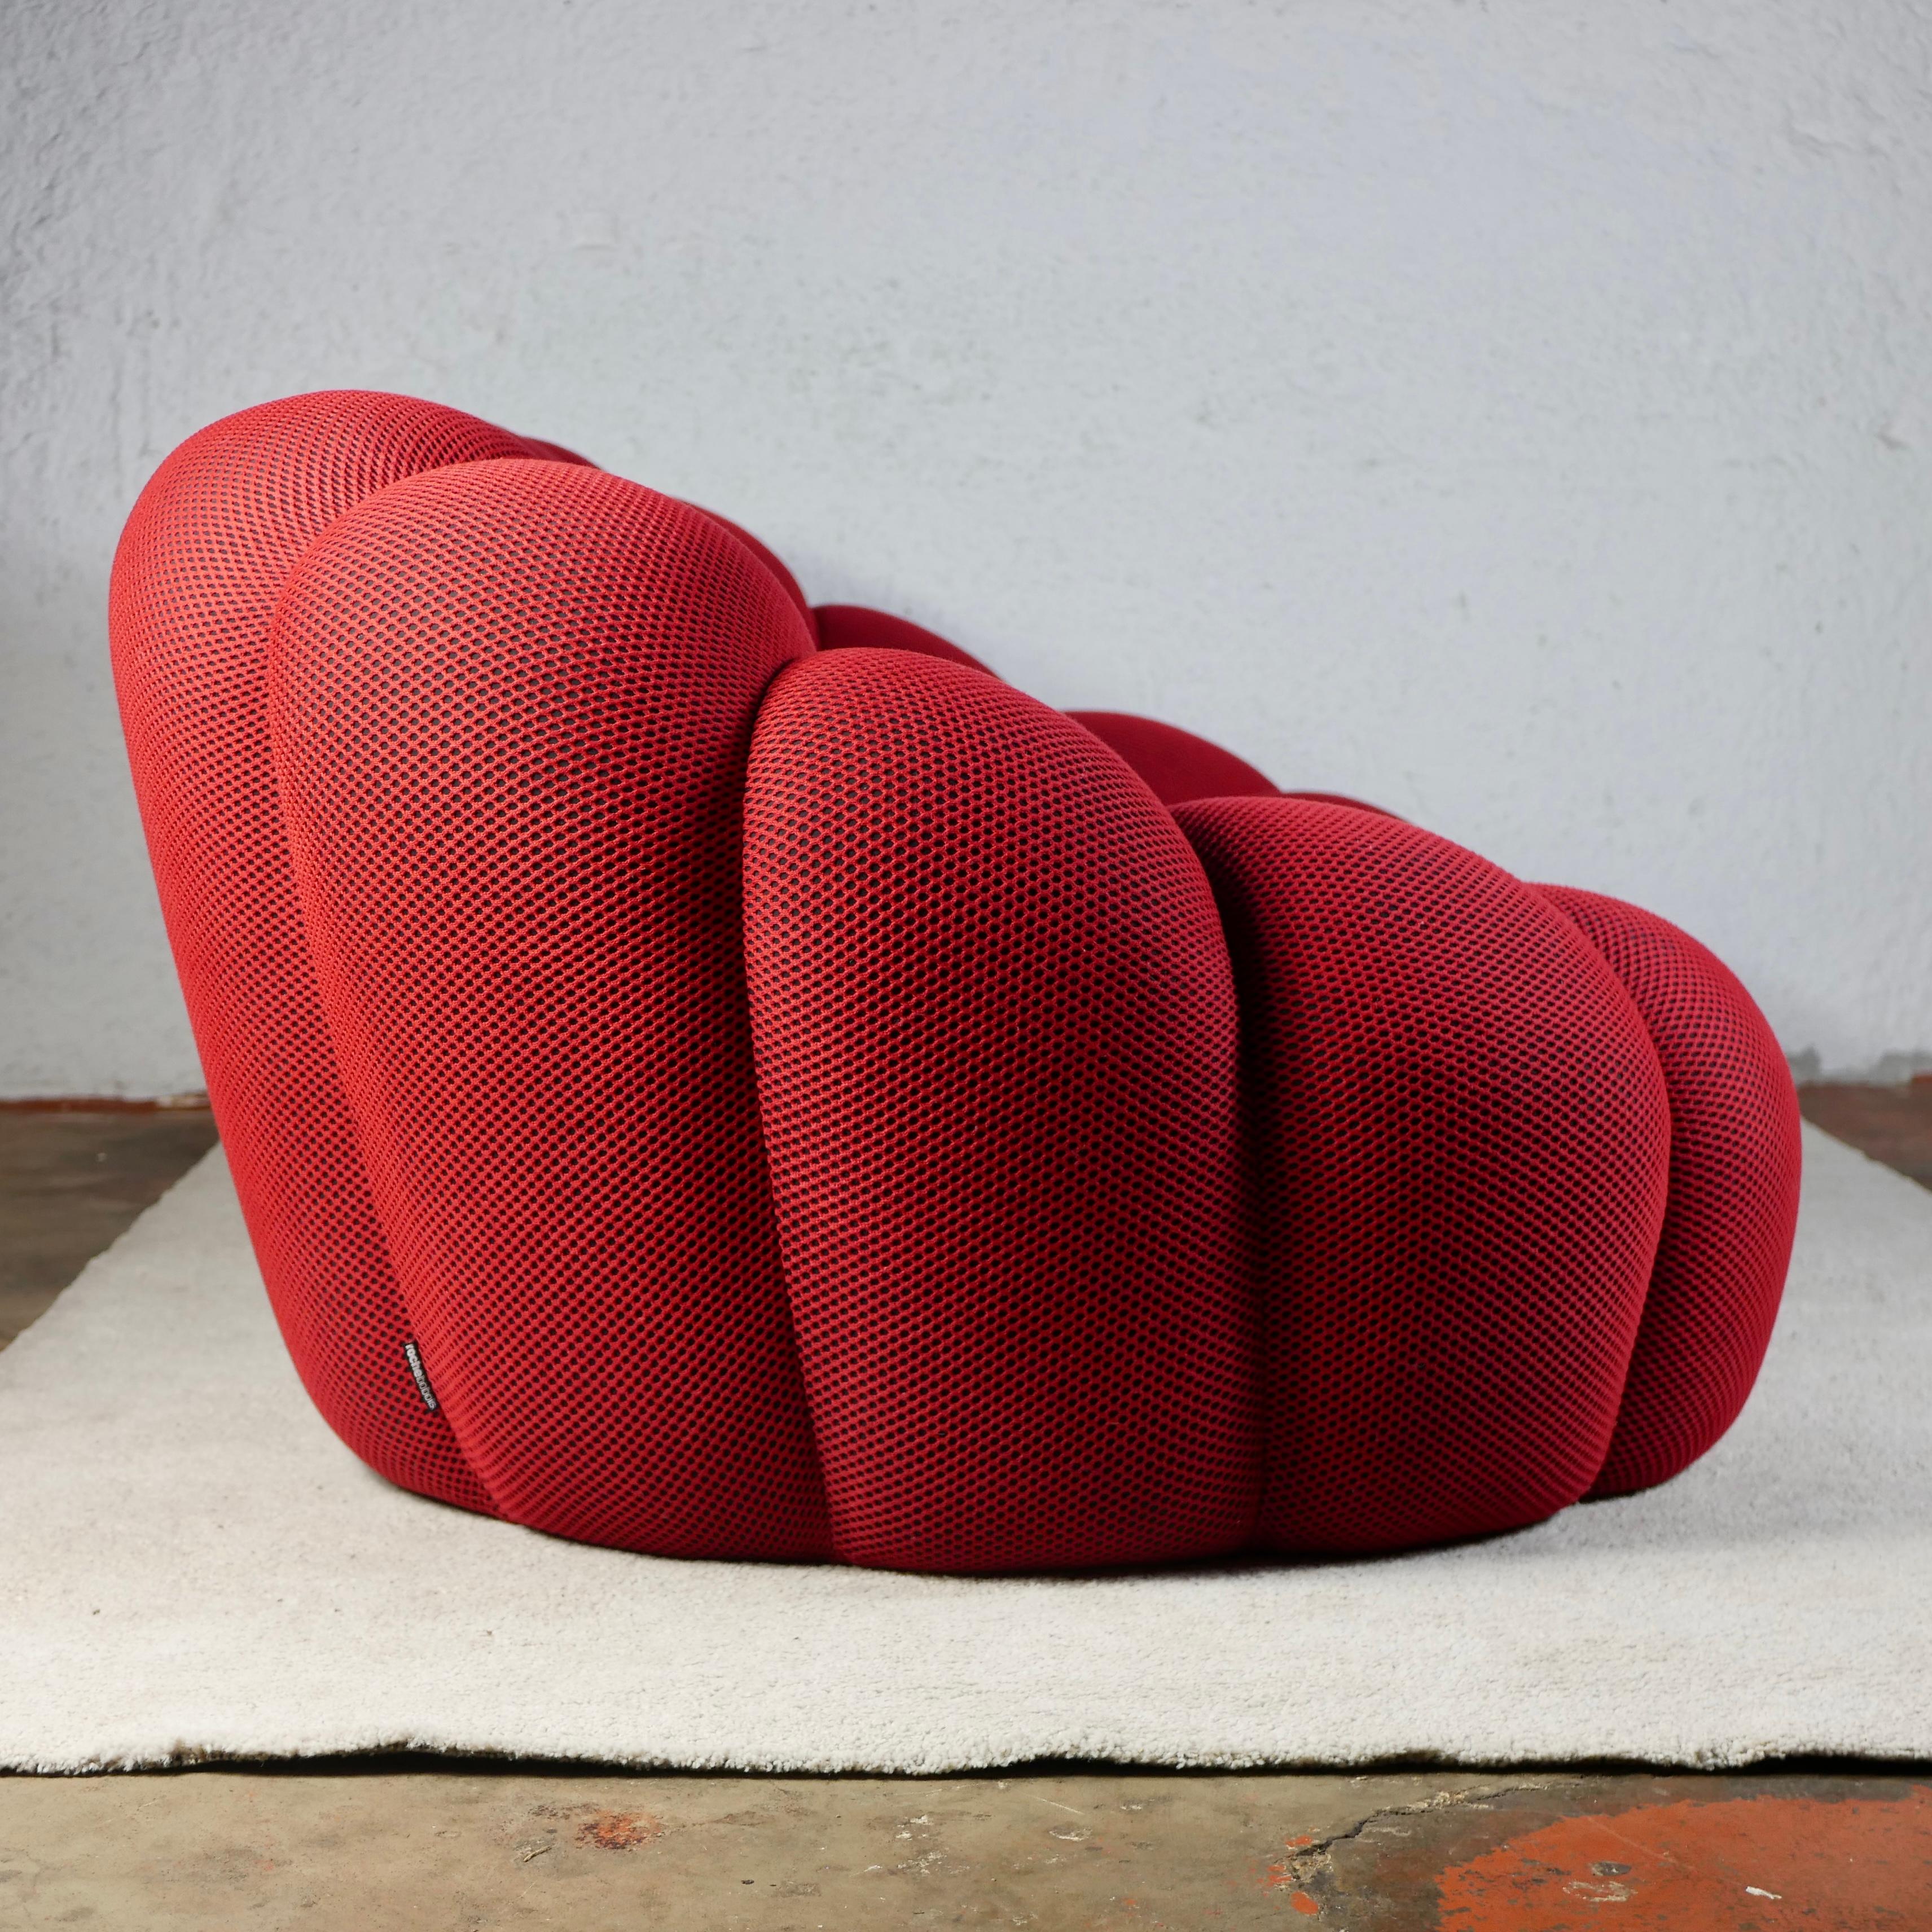 Fabric Bubble sofa Techno 3D fabric by Sacha Lakic for Roche Bobois, 2014